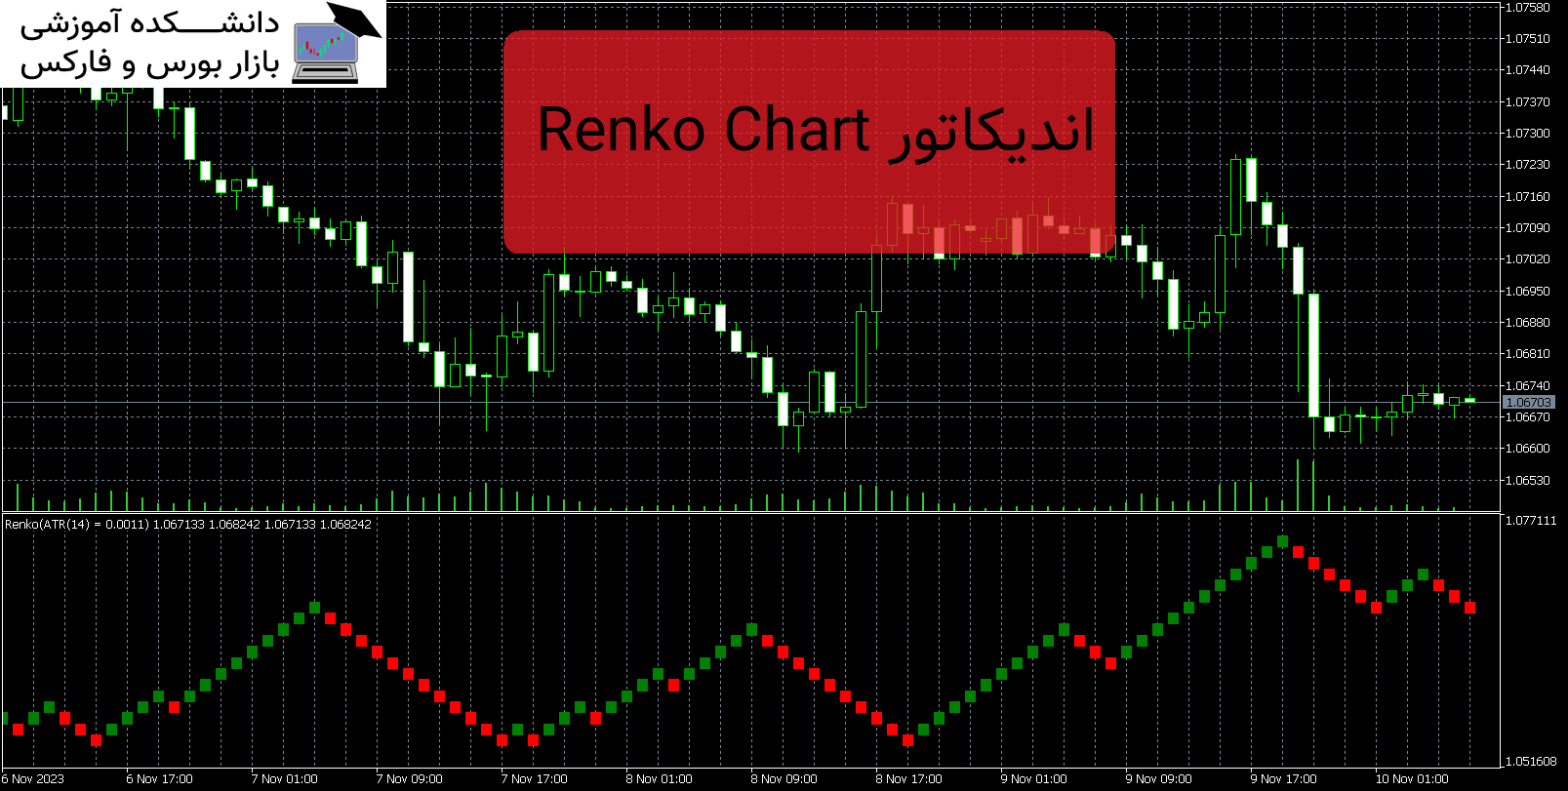 Renko Chart دانلود و معرفی اندیکاتور